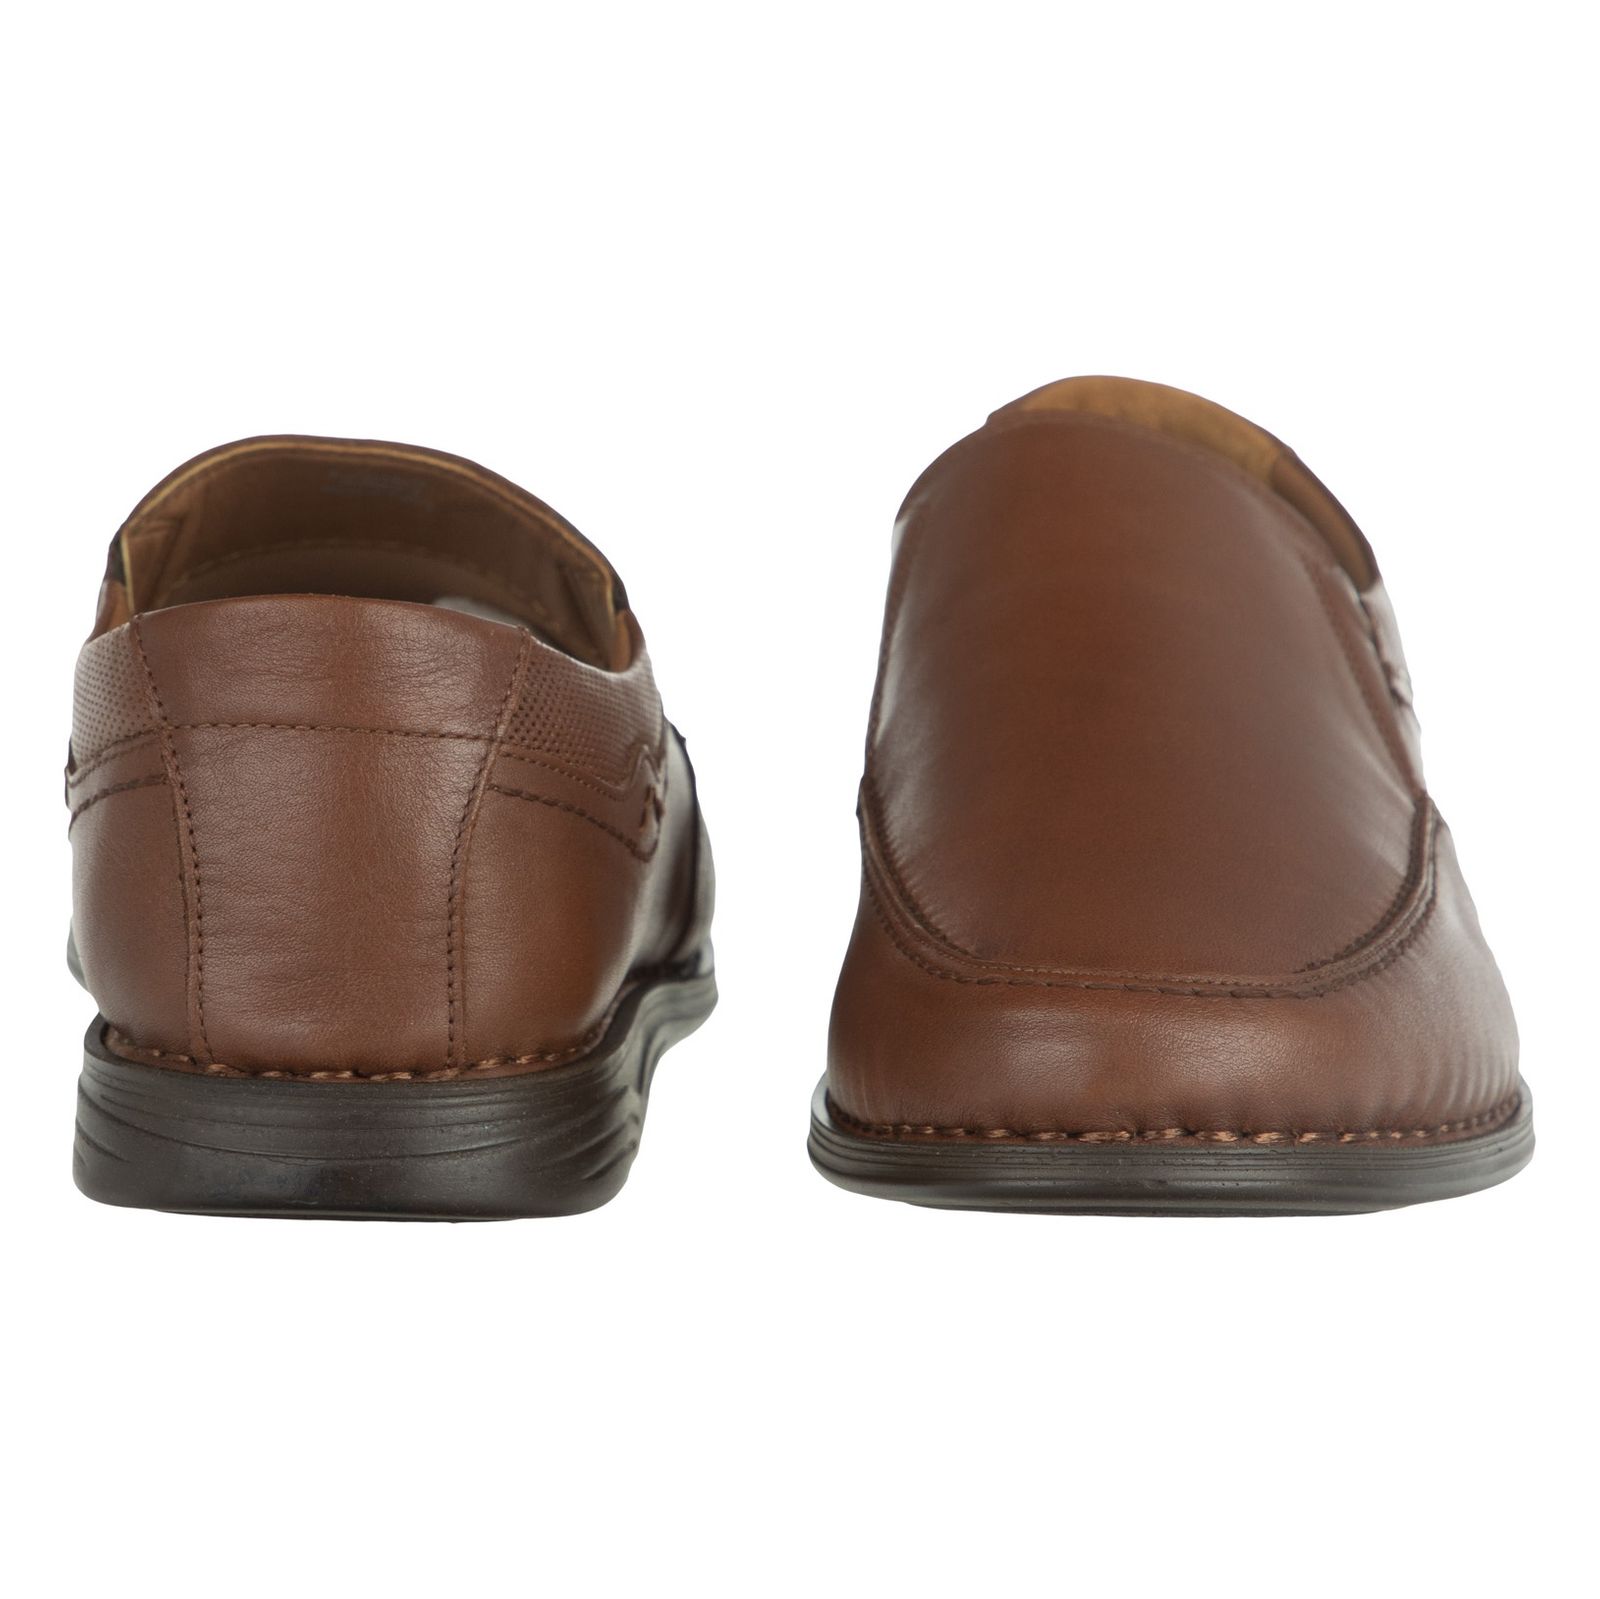 کفش روزمره مردانه پولاریس مدل 100296913-122 - قهوه ای - 4